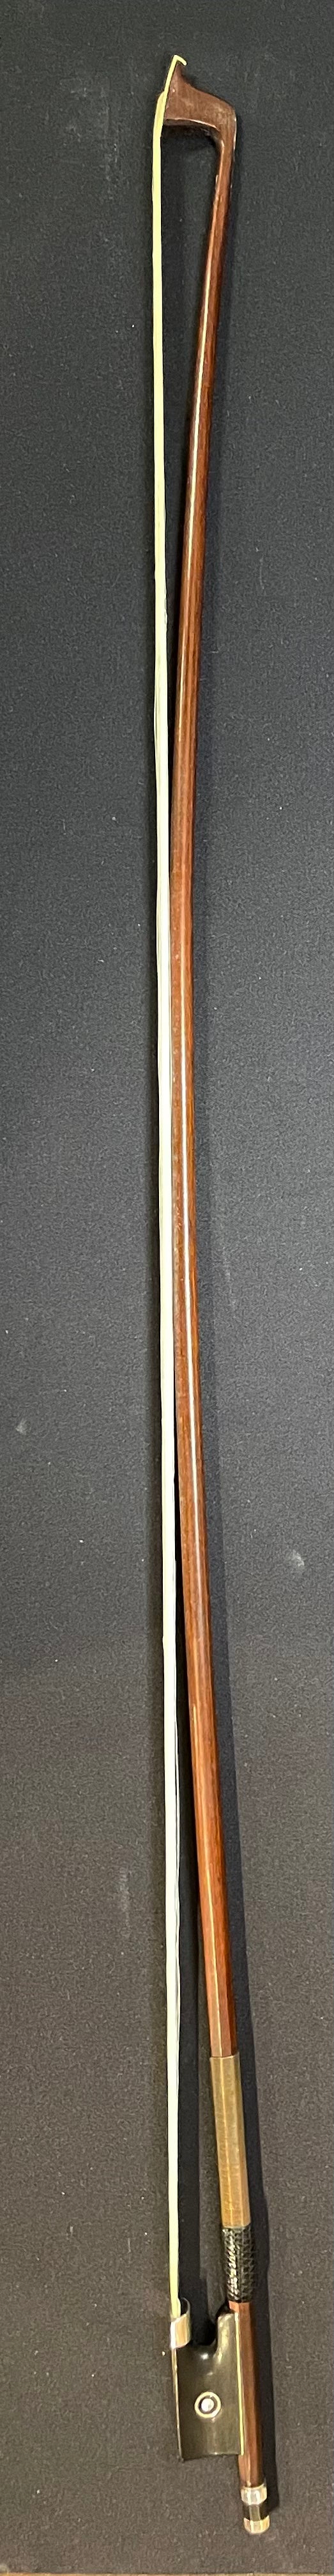 4/4 Violin Bow - LSB Wood Model